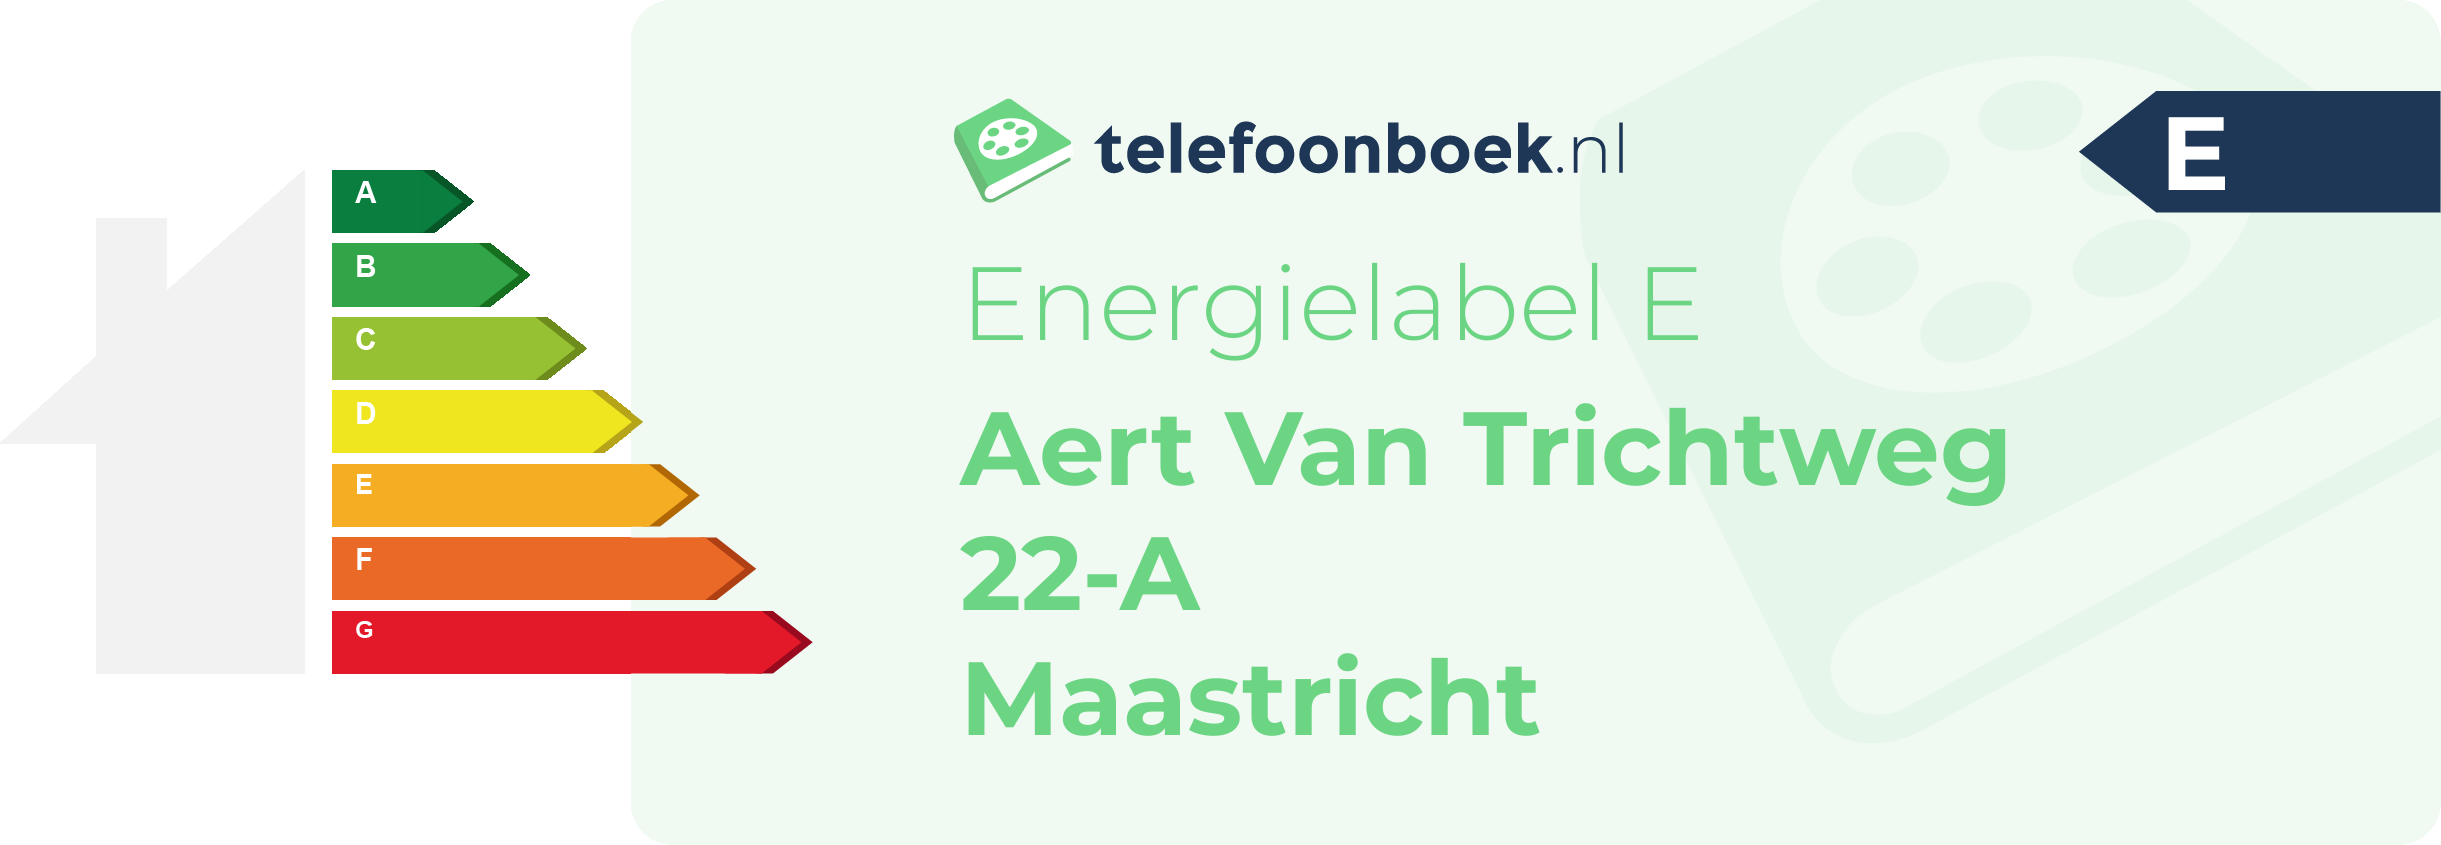 Energielabel Aert Van Trichtweg 22-A Maastricht